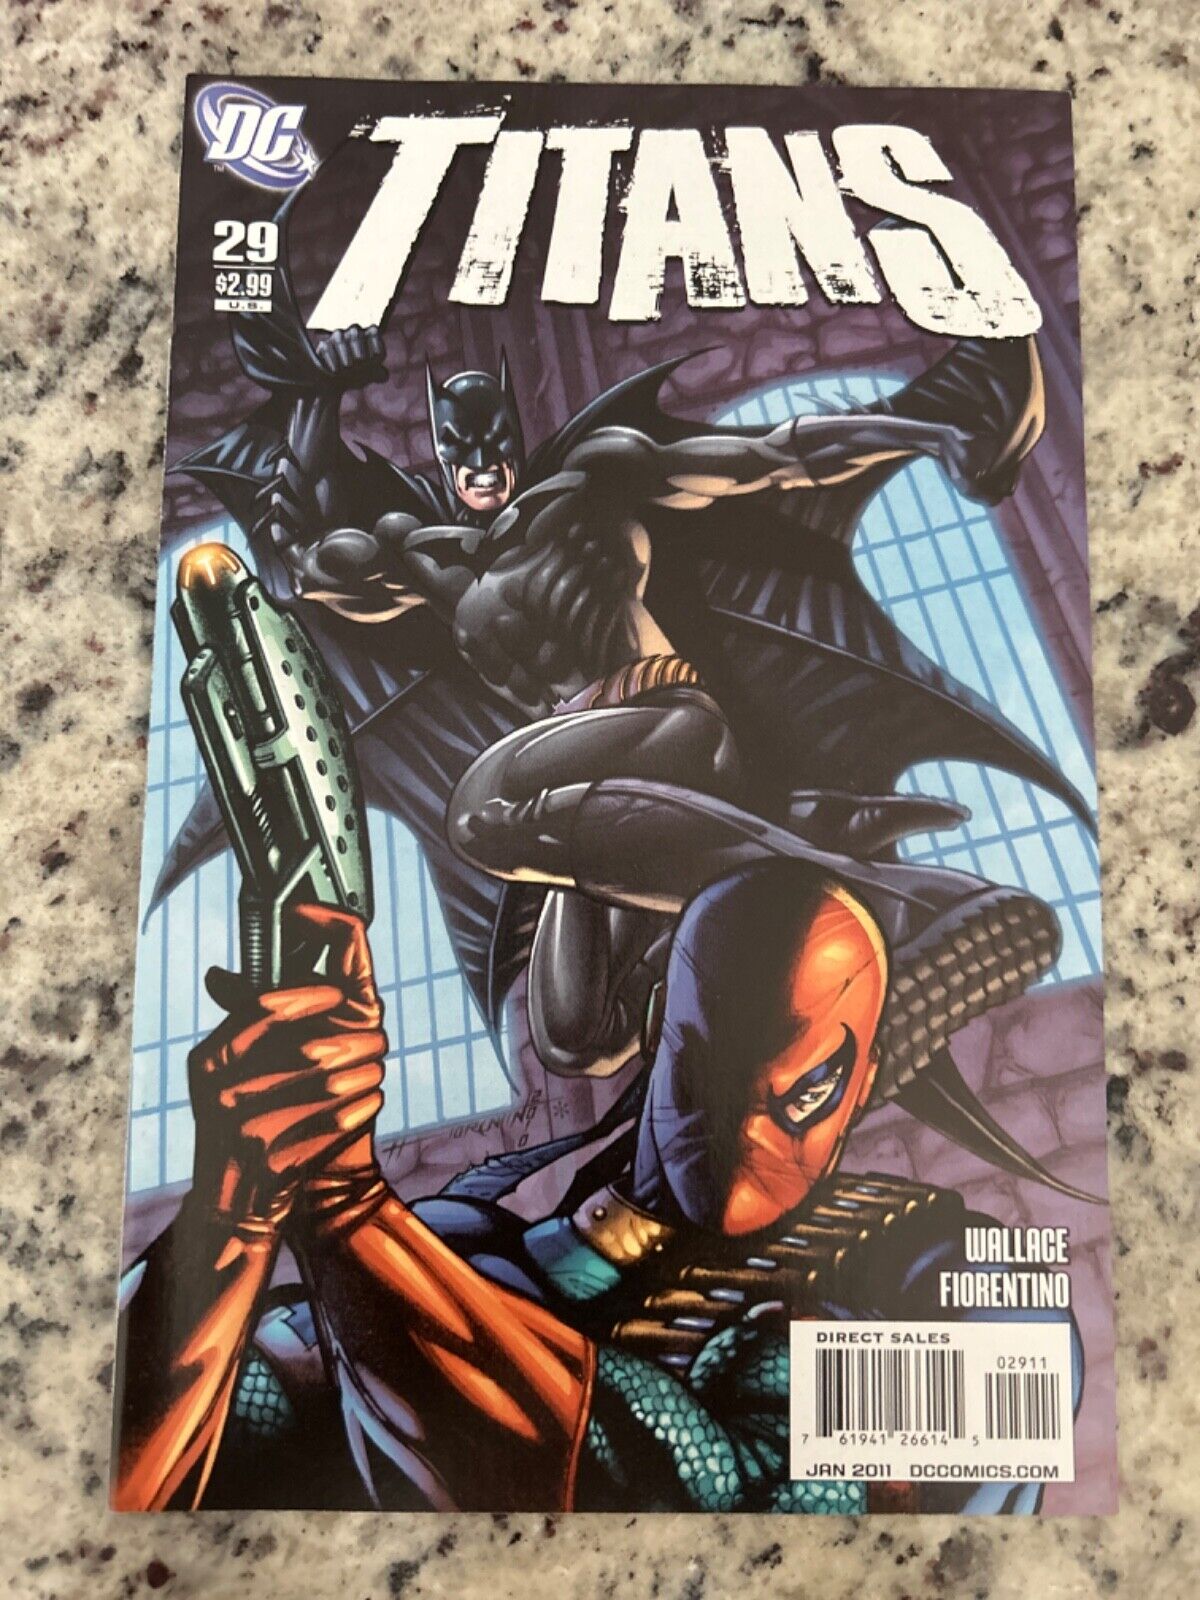 Titans #29 Vol. 2 (DC, 2011) vf